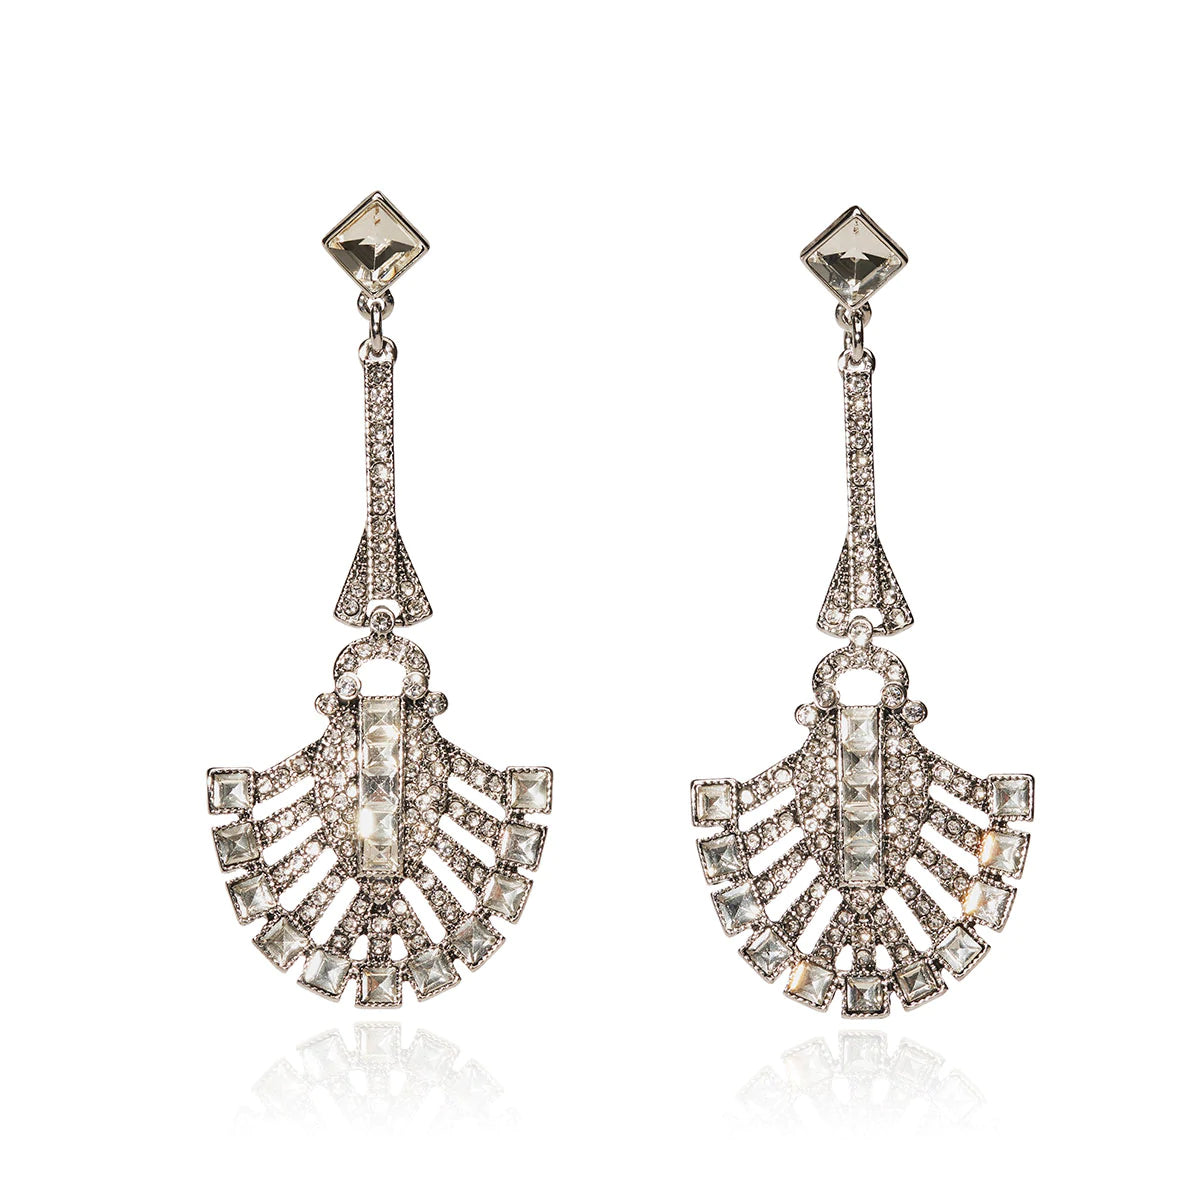 Nouveau long drop crystal earrings